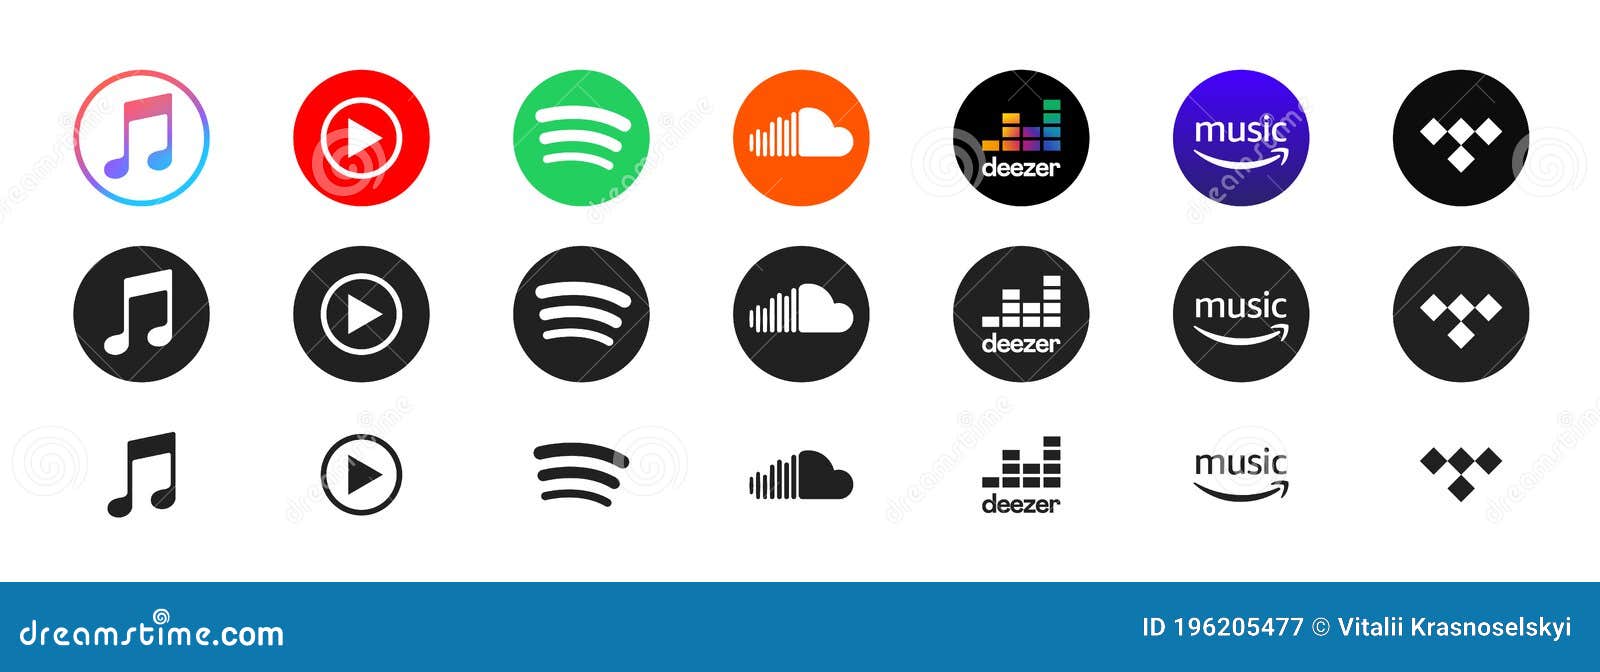 AniPlaylist  TrySail on Spotify & Apple Music